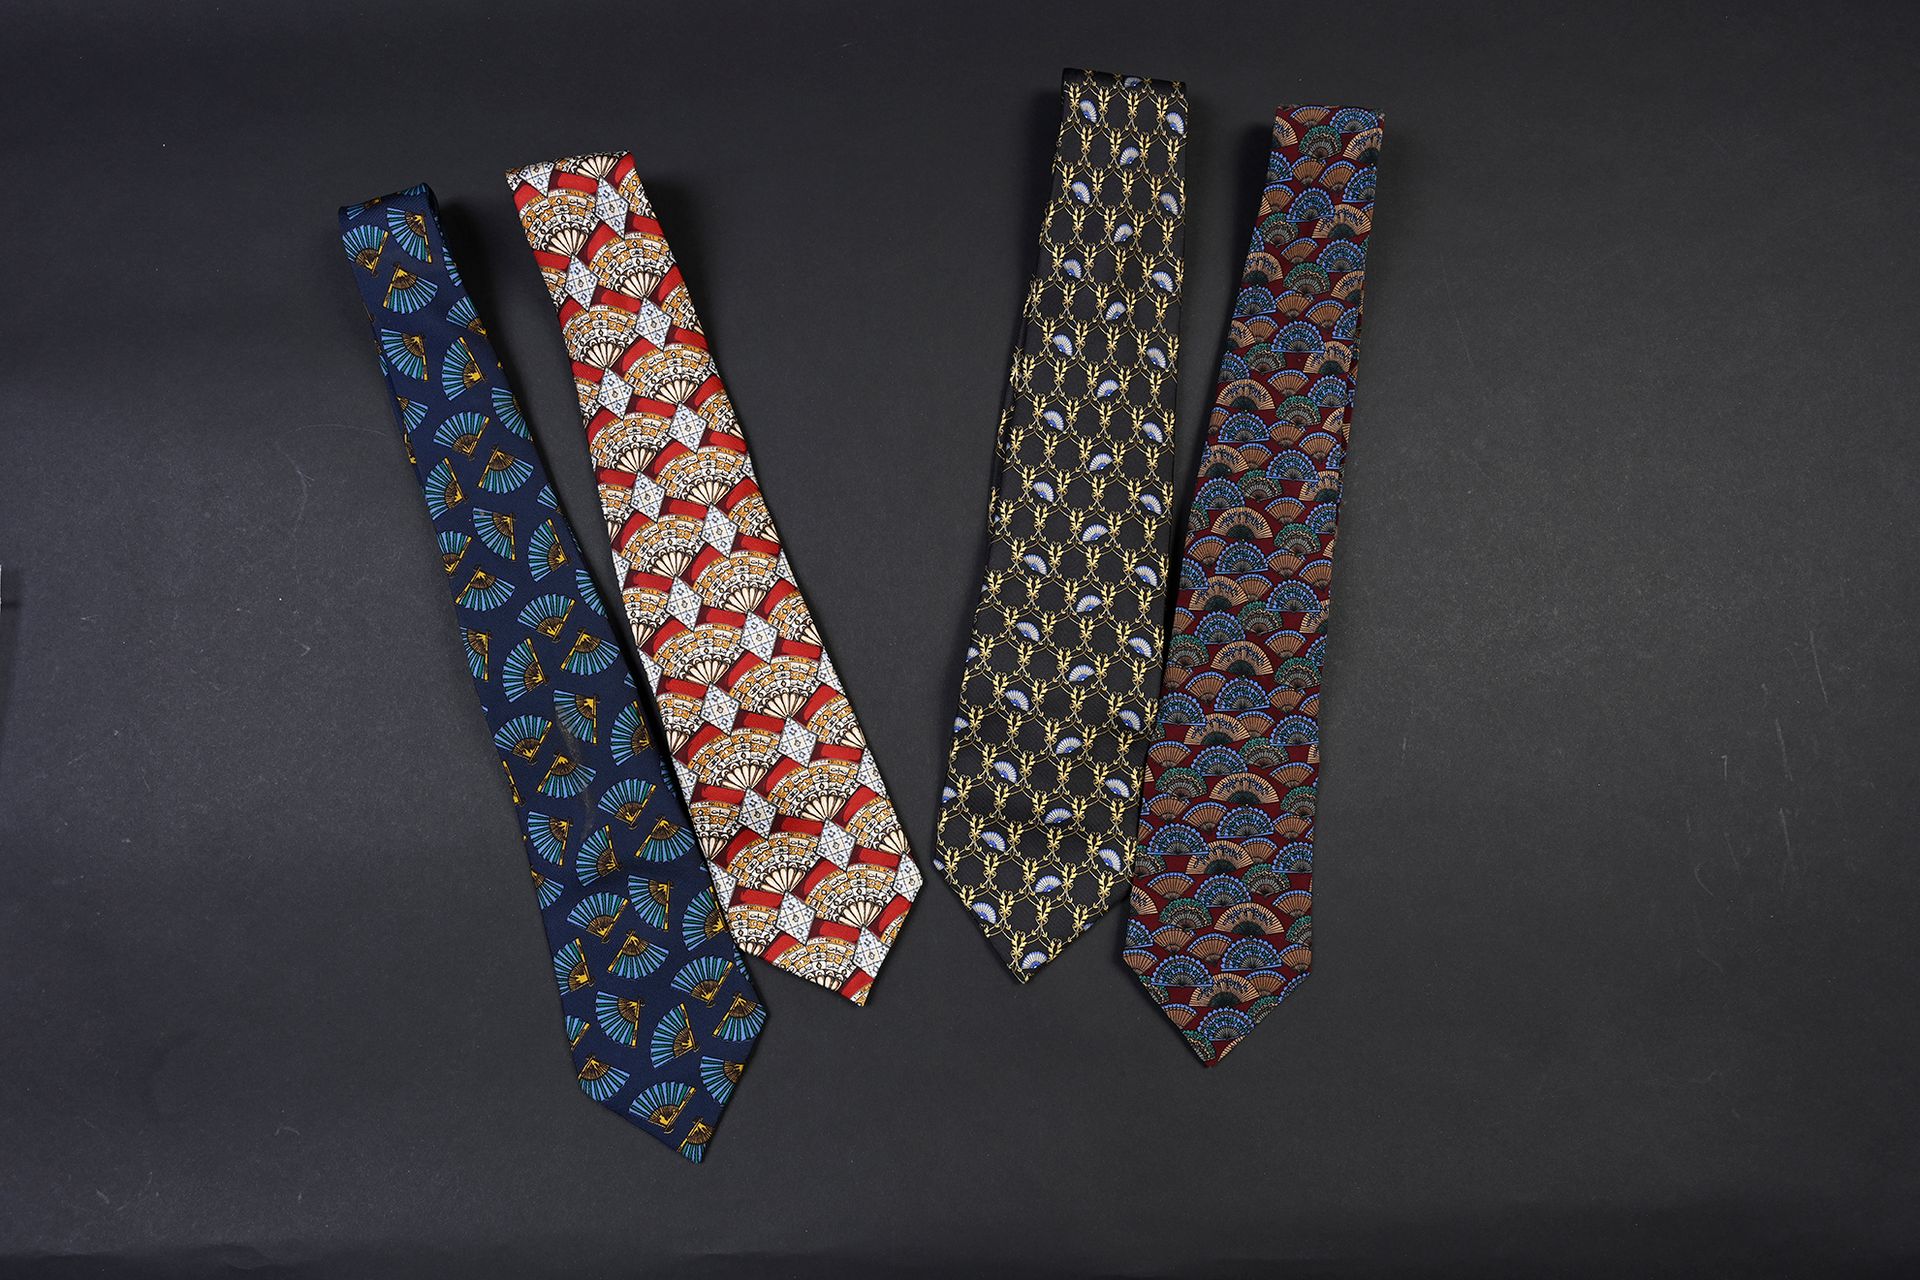 Null 领带，20世纪
丝绸材质，有扇形装饰。来自Nina Ricci, David Evans, Axel Mod, Austin Reed.